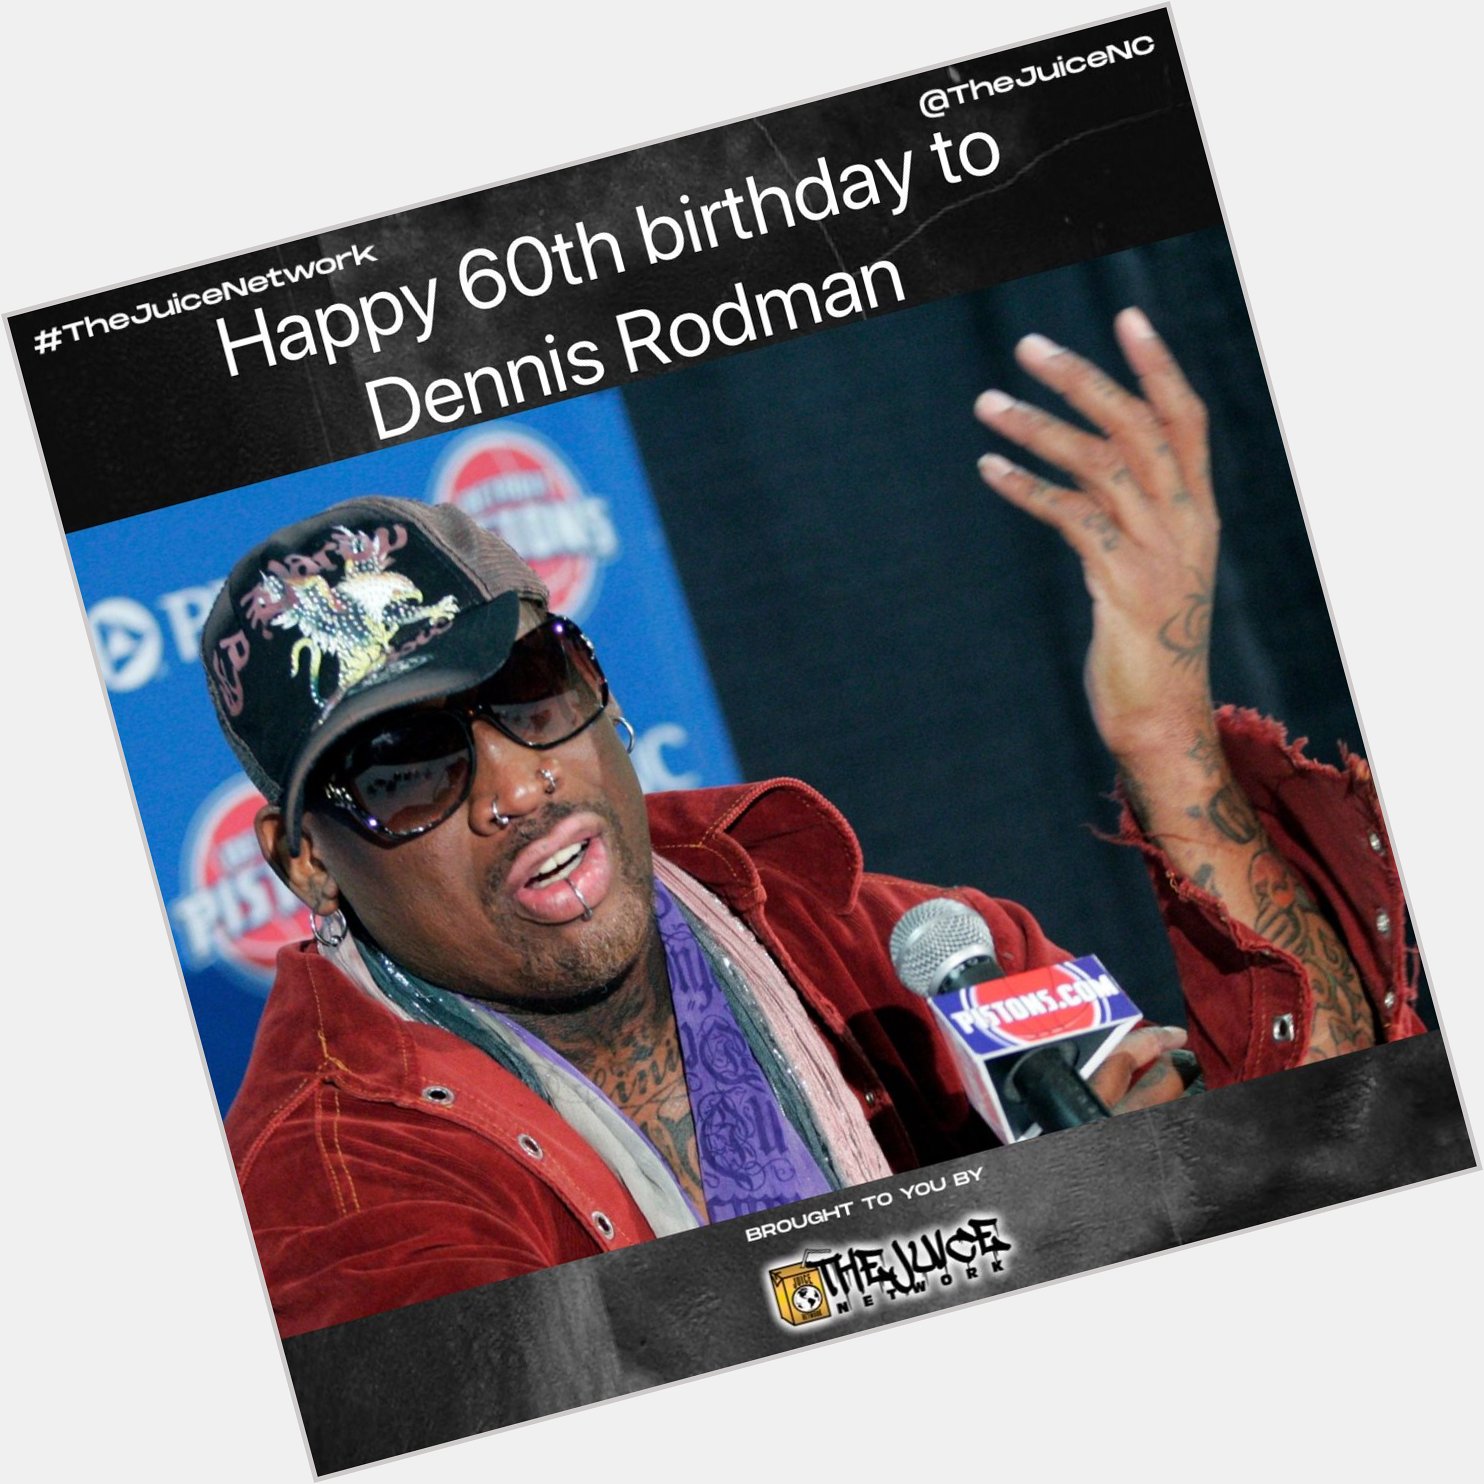 Happy 60th birthday to Dennis Rodman!    